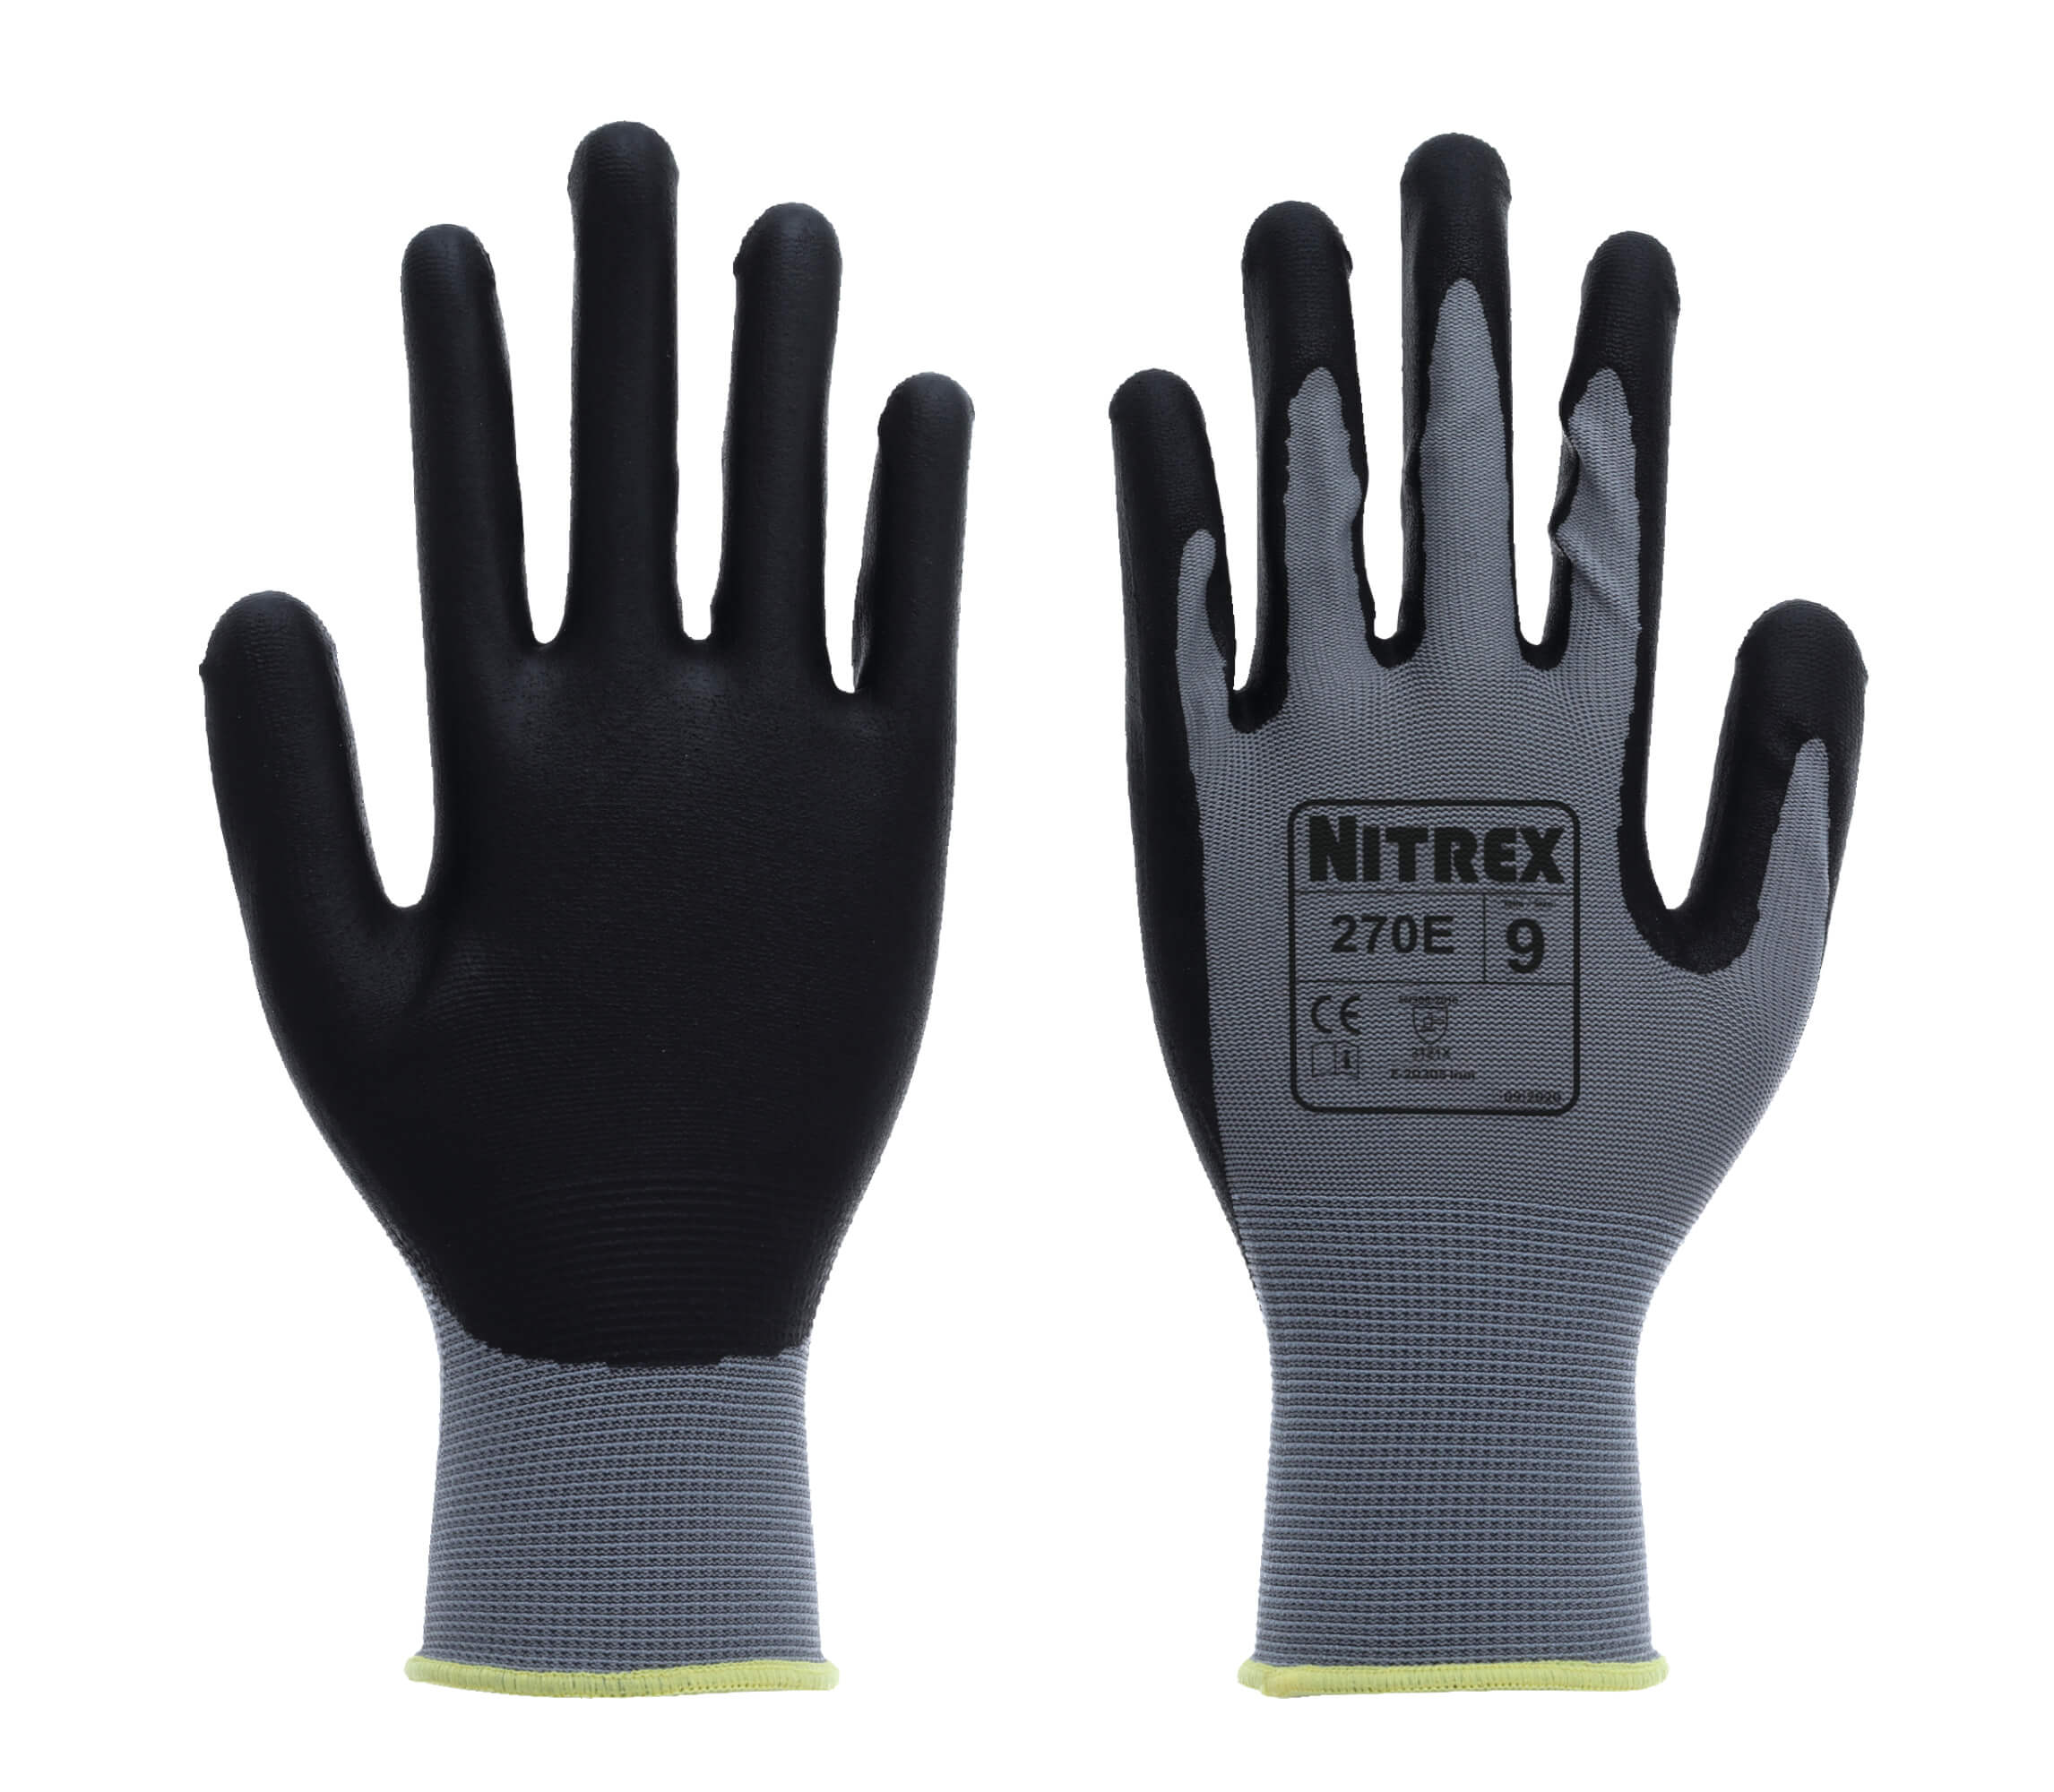 Nitrex 270E - Foam Nitrile Palm Coated Gloves - Size 6/XS